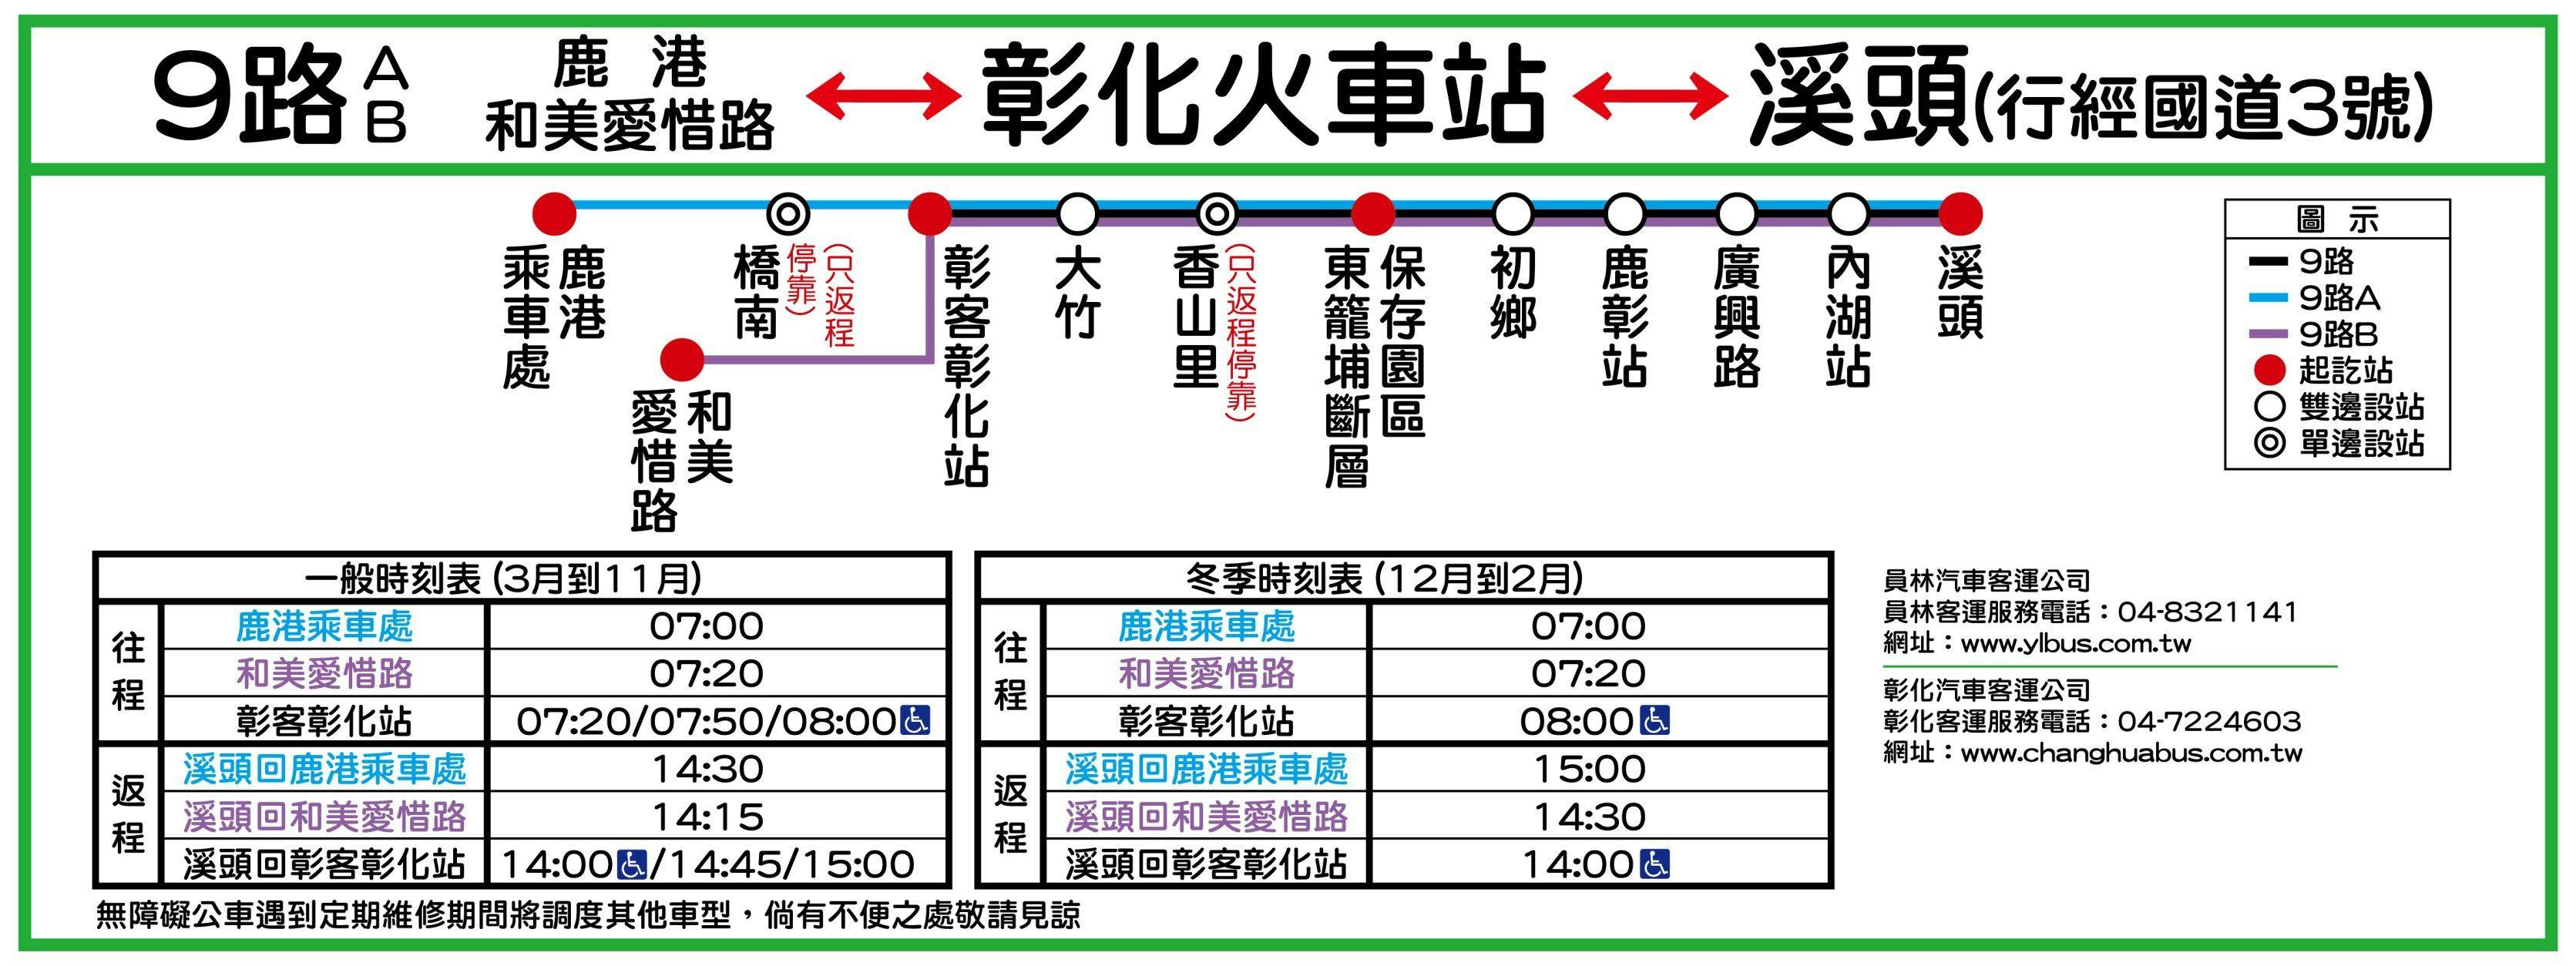 9路Route Map-彰化 Bus